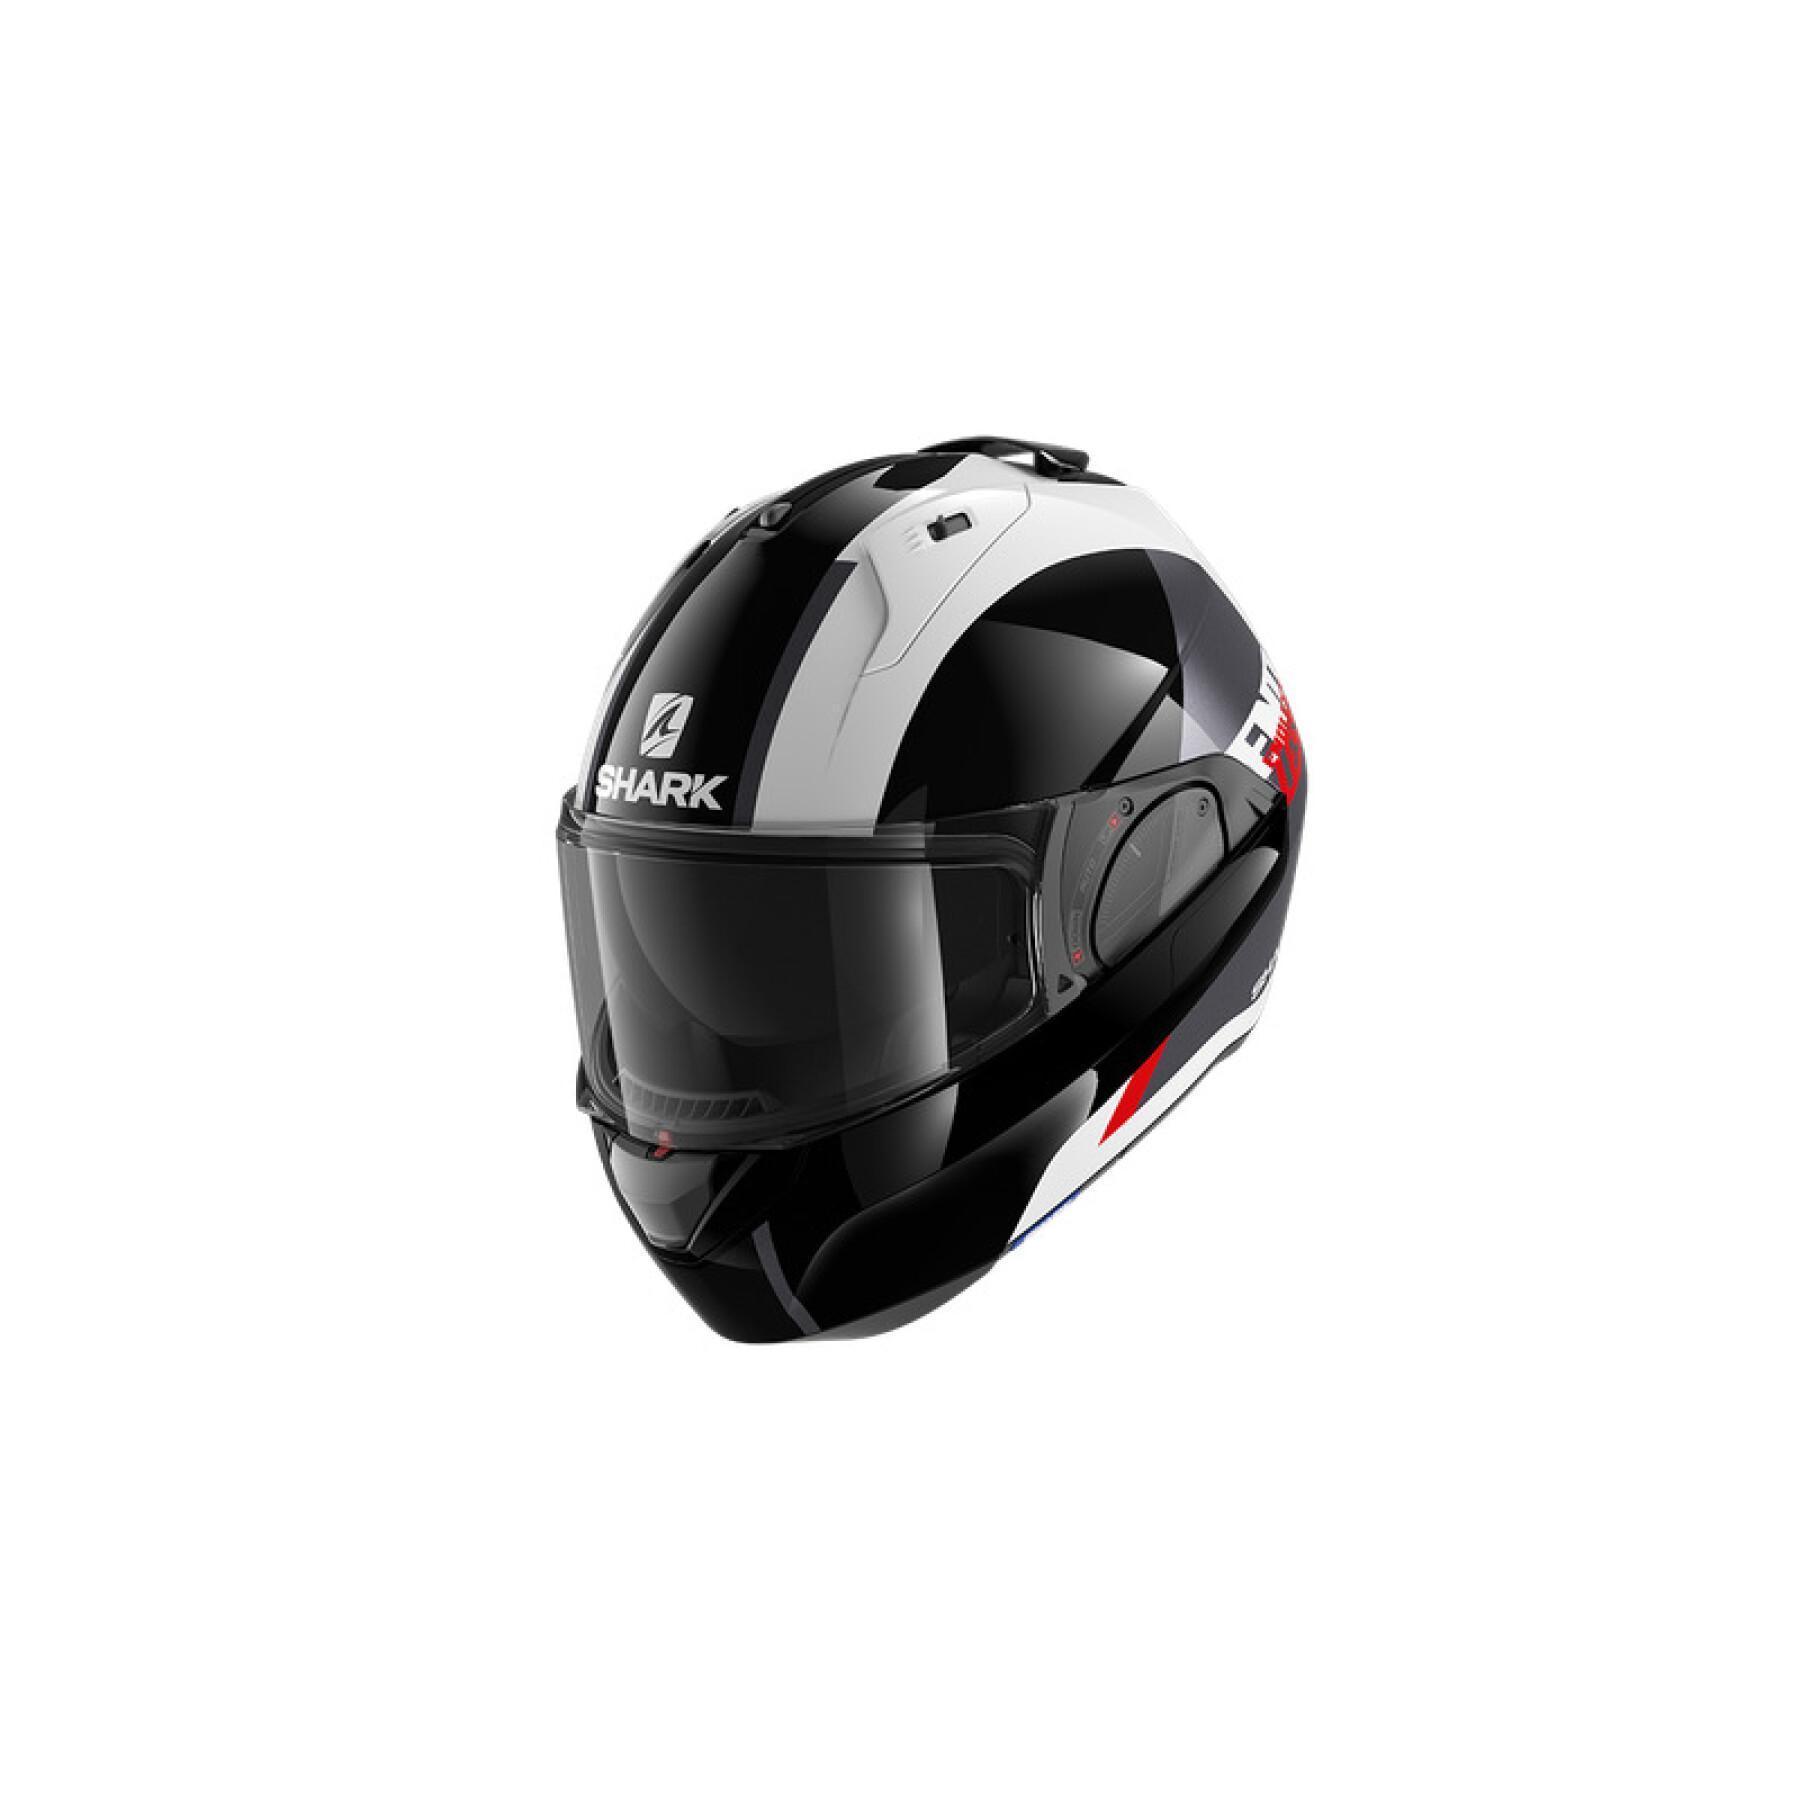 Modular motorcycle helmet Shark evo es endless